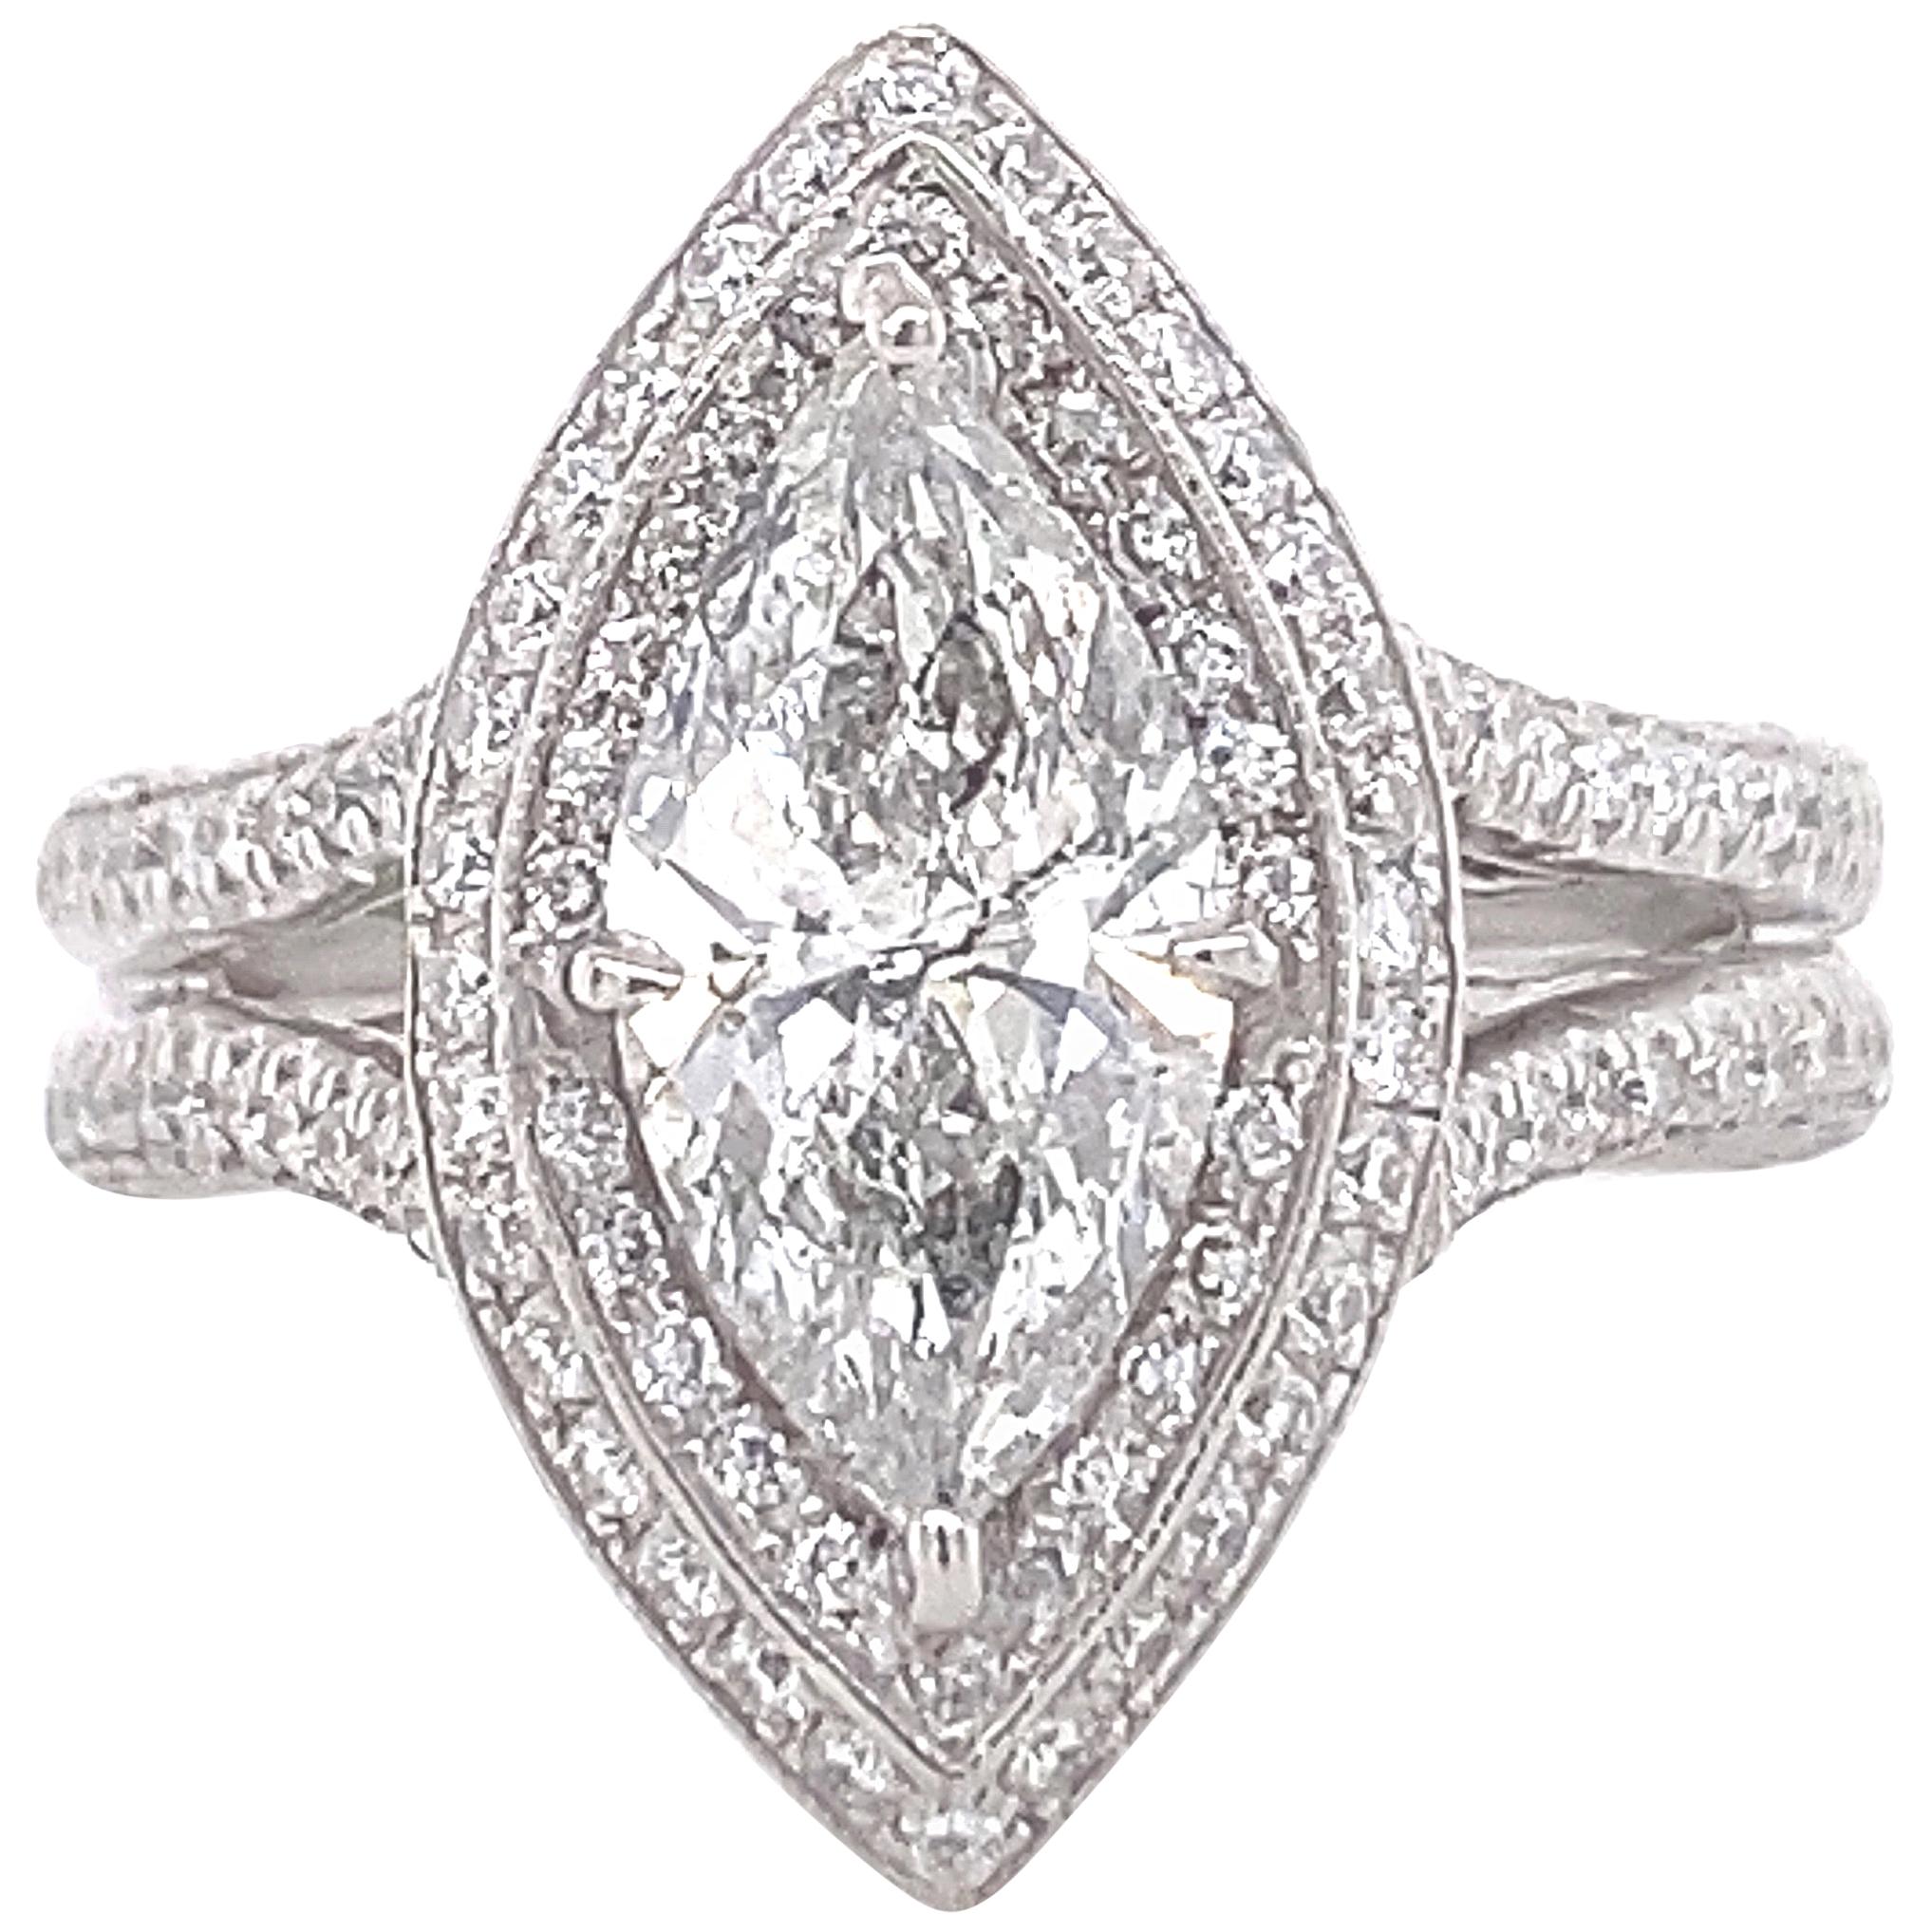 J.B. Star Marquise Diamond 2.35 Carat Diamond Engagement Ring Platinum